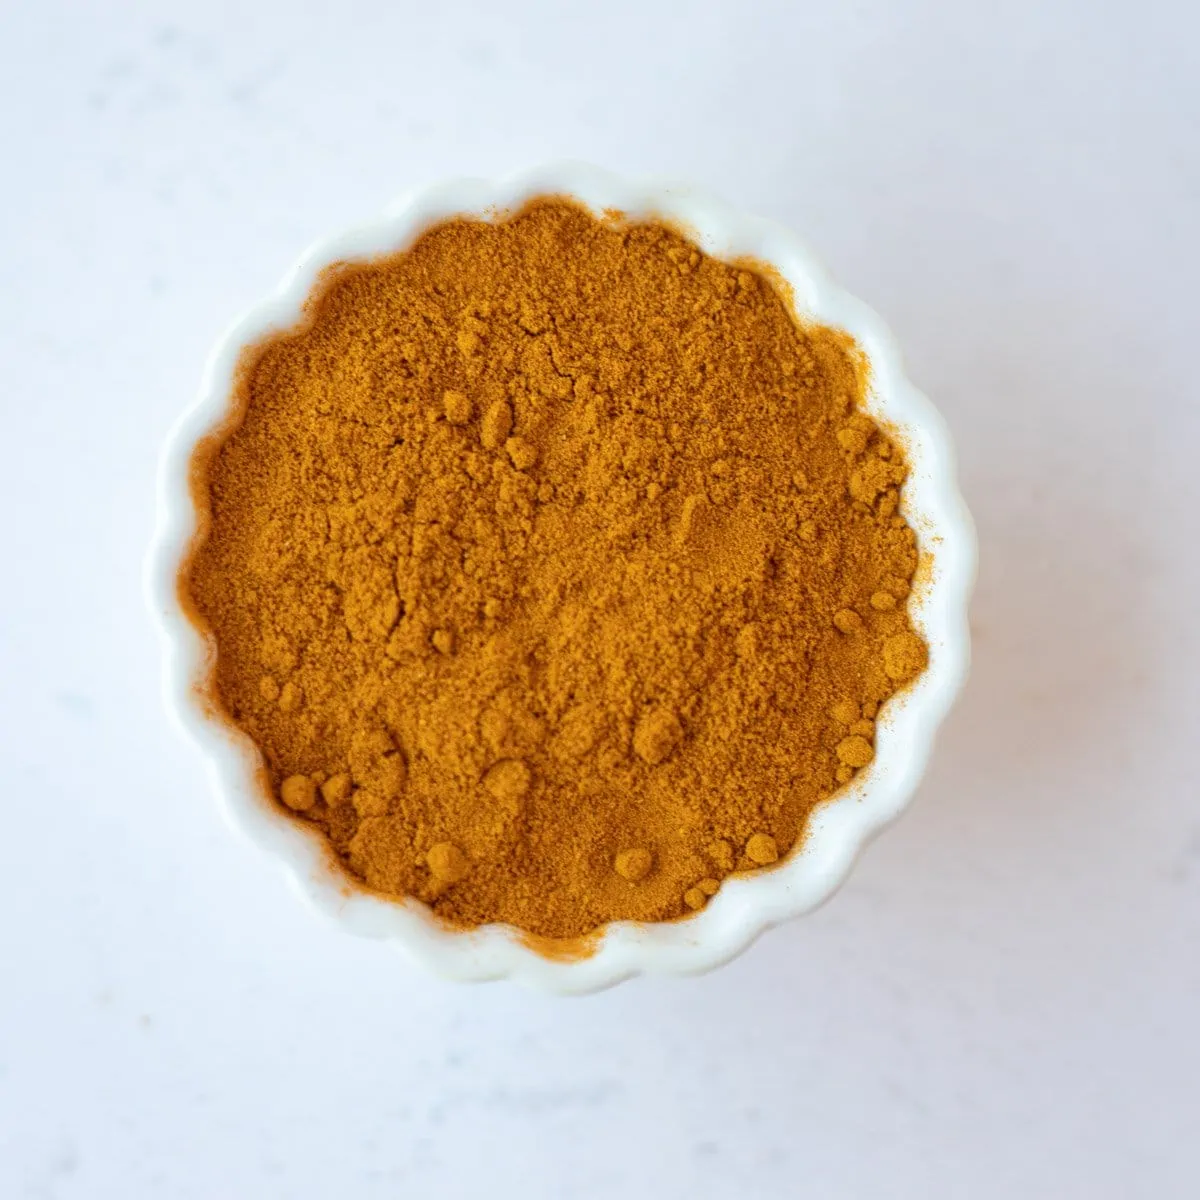 Turmeric powder in a small white bowl.